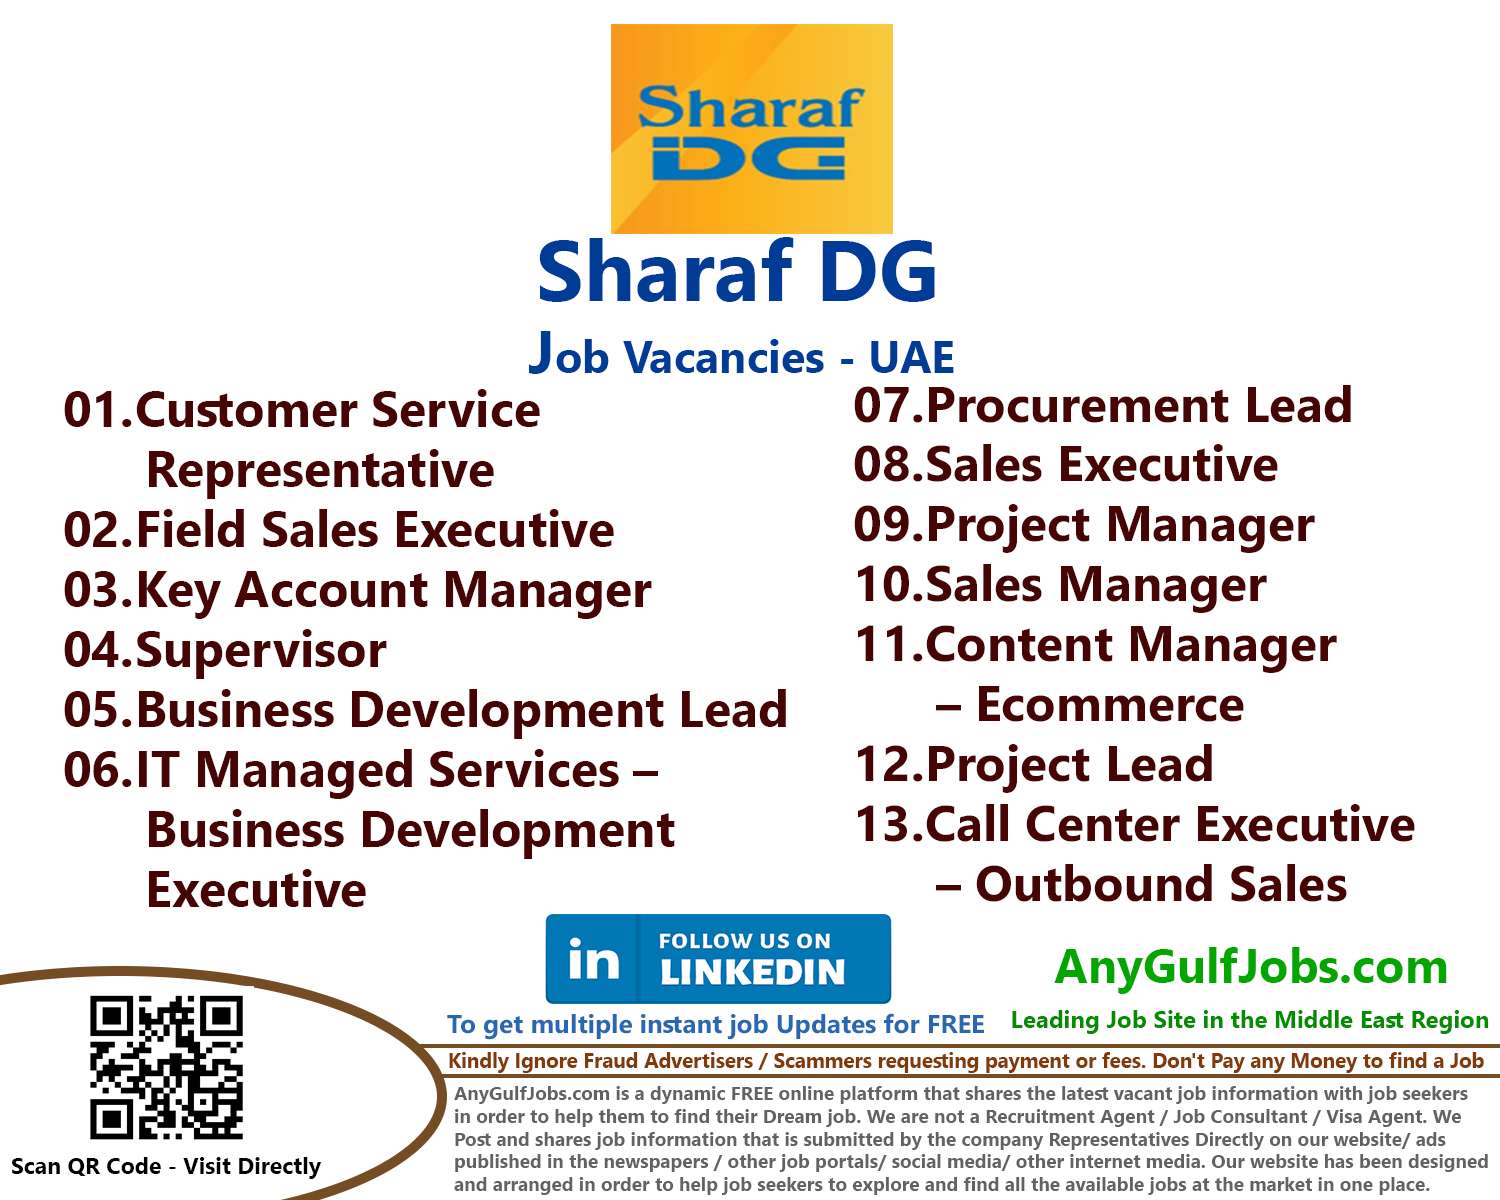 List of Sharaf DG Jobs - UAE